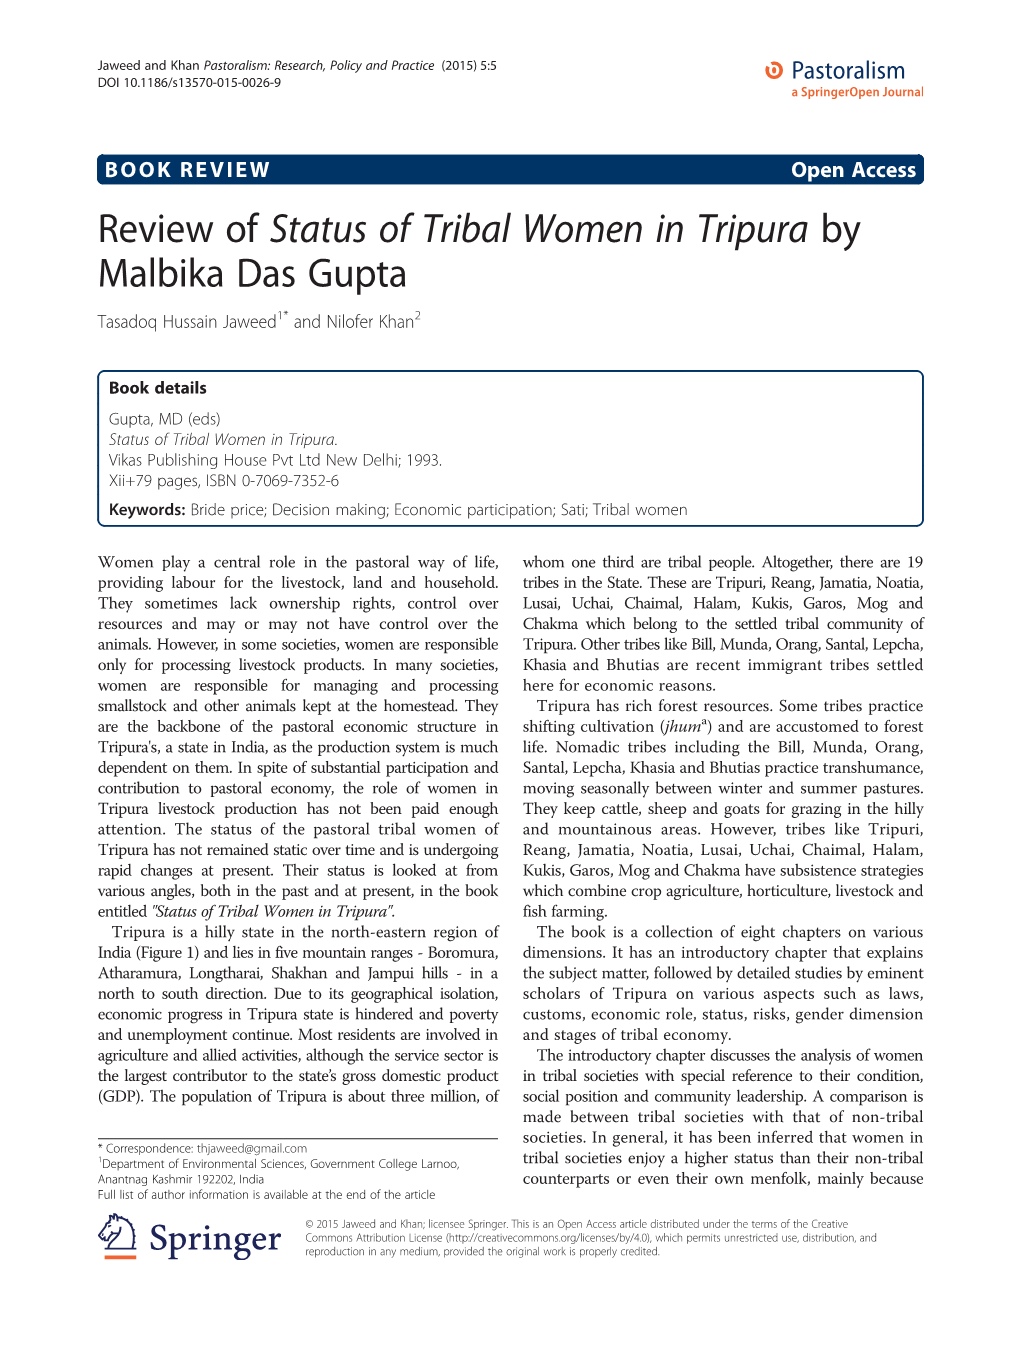 Review of Status of Tribal Women in Tripura by Malbika Das Gupta Tasadoq Hussain Jaweed1* and Nilofer Khan2